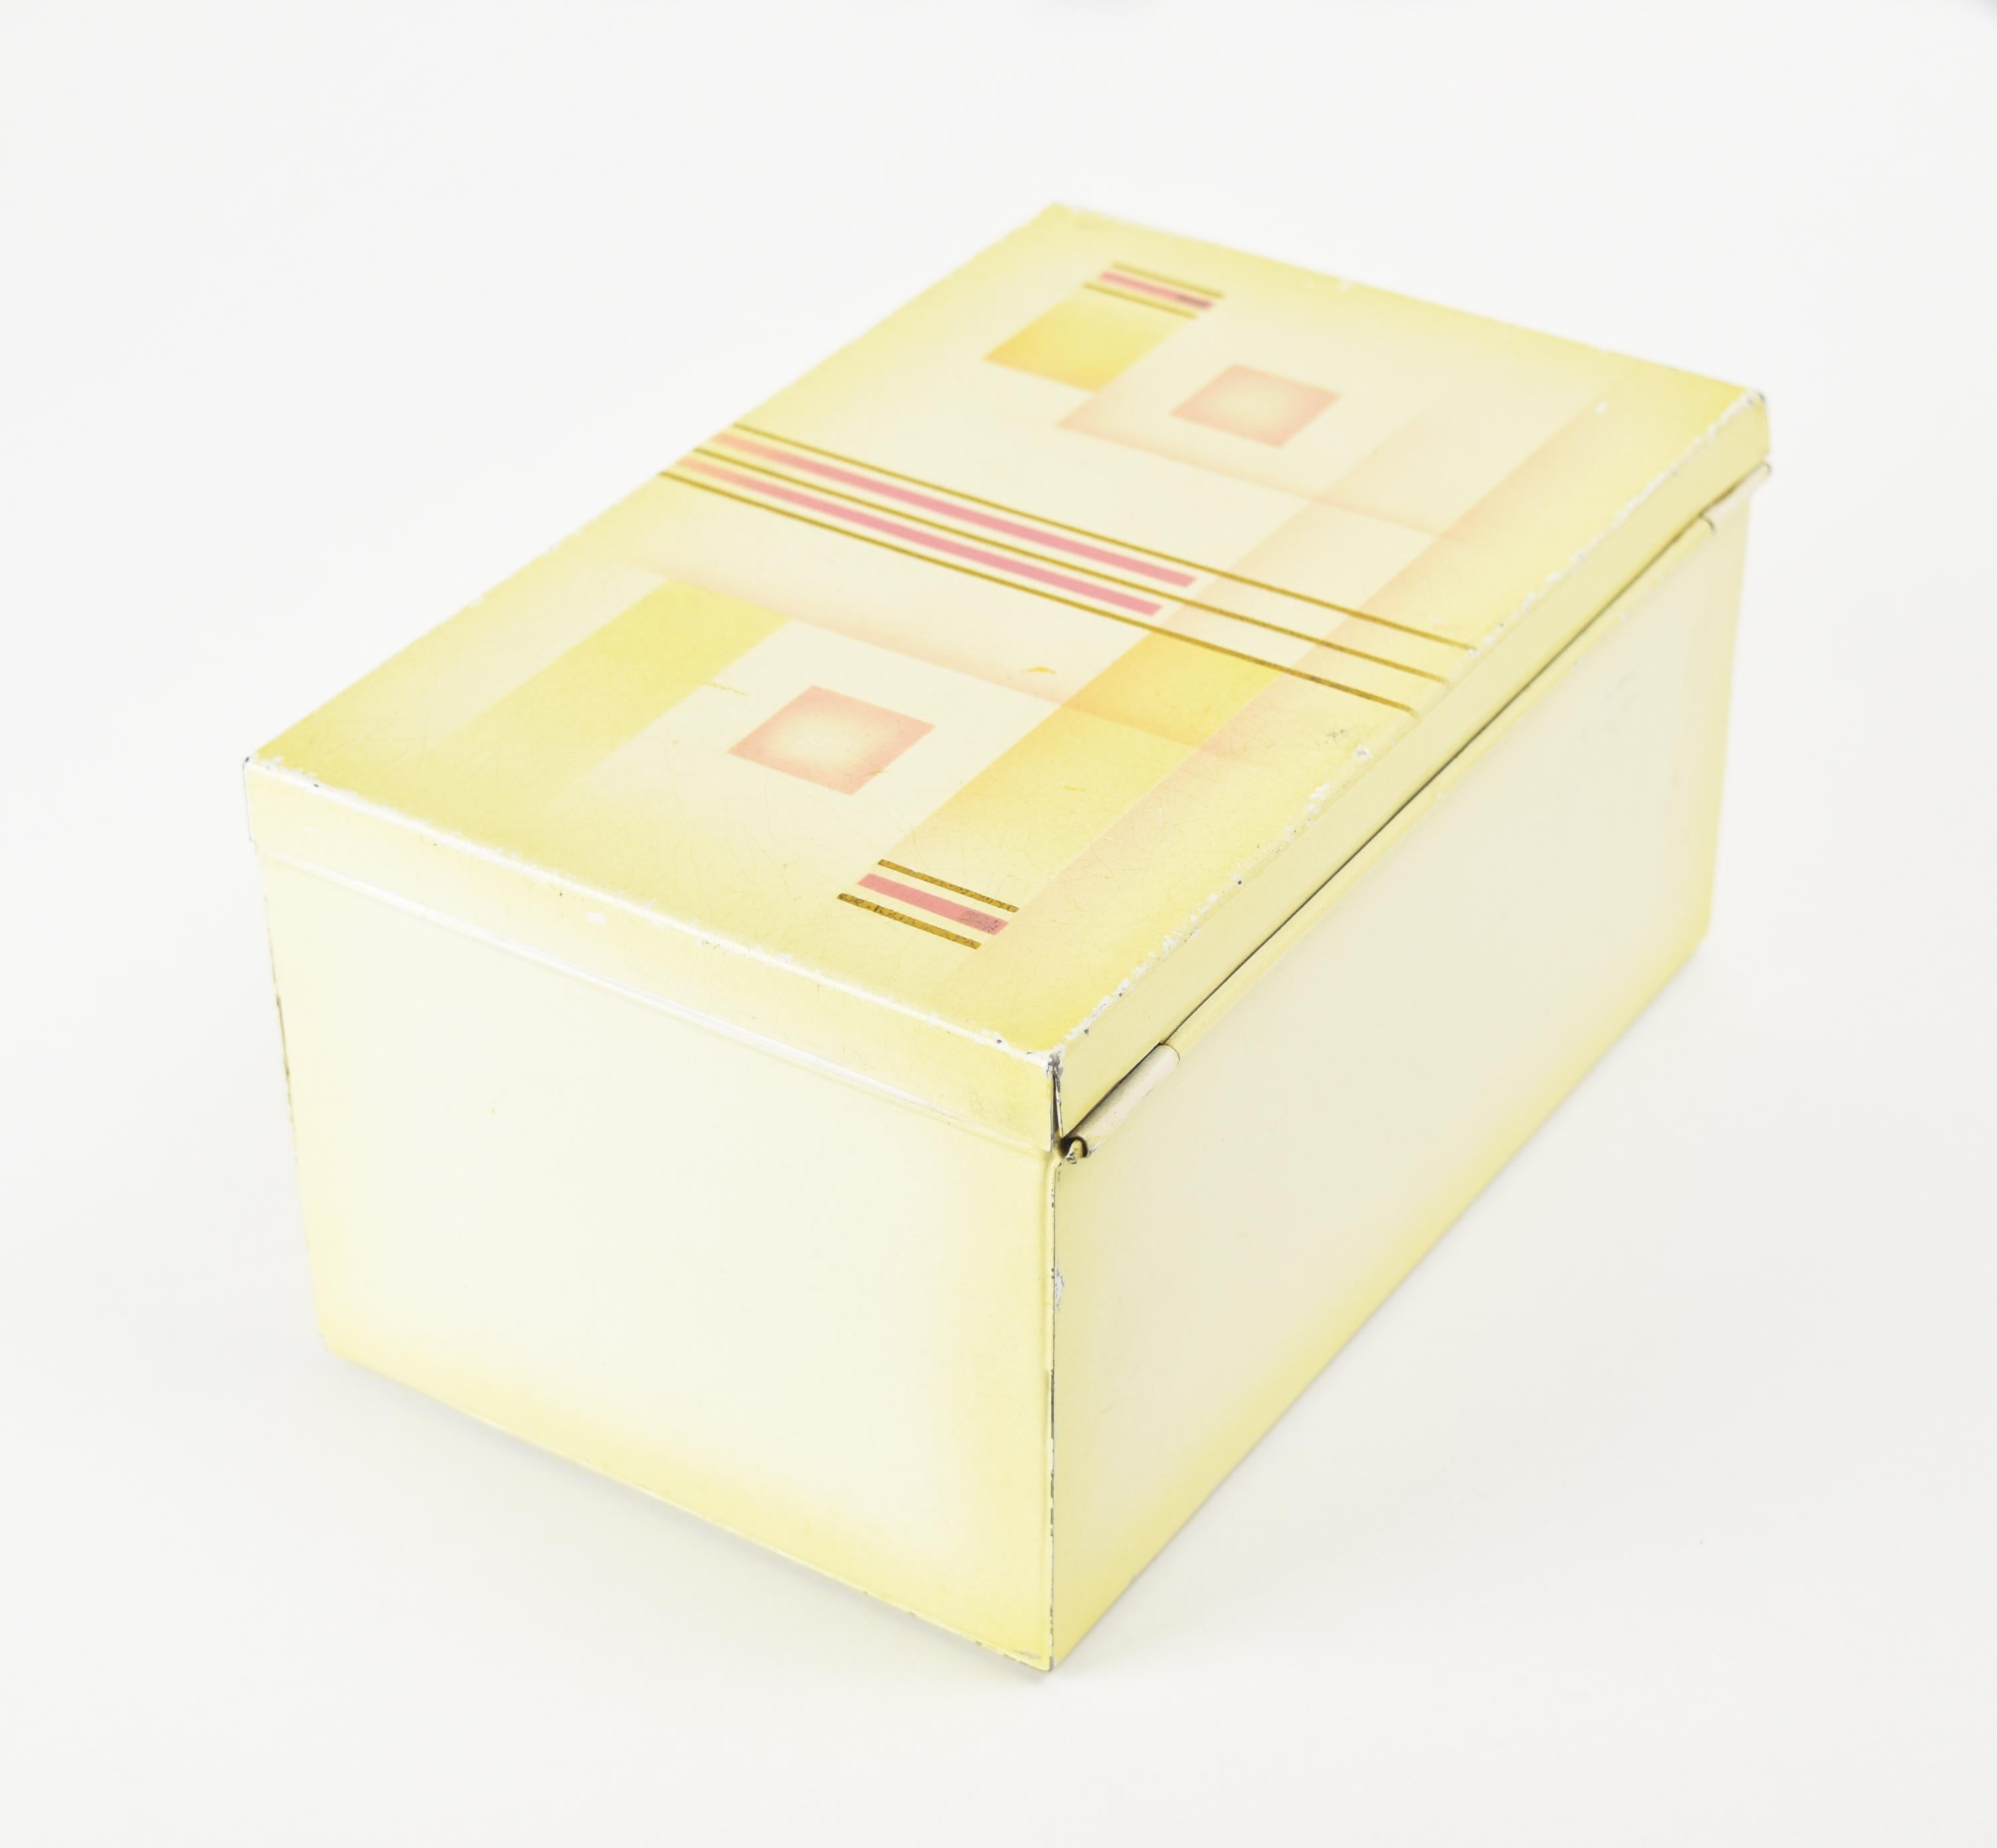 Early 20th Century Art Deco Modernist Spritzdekor Metal Tin Box Container Marianne Brandt Bauhaus For Sale